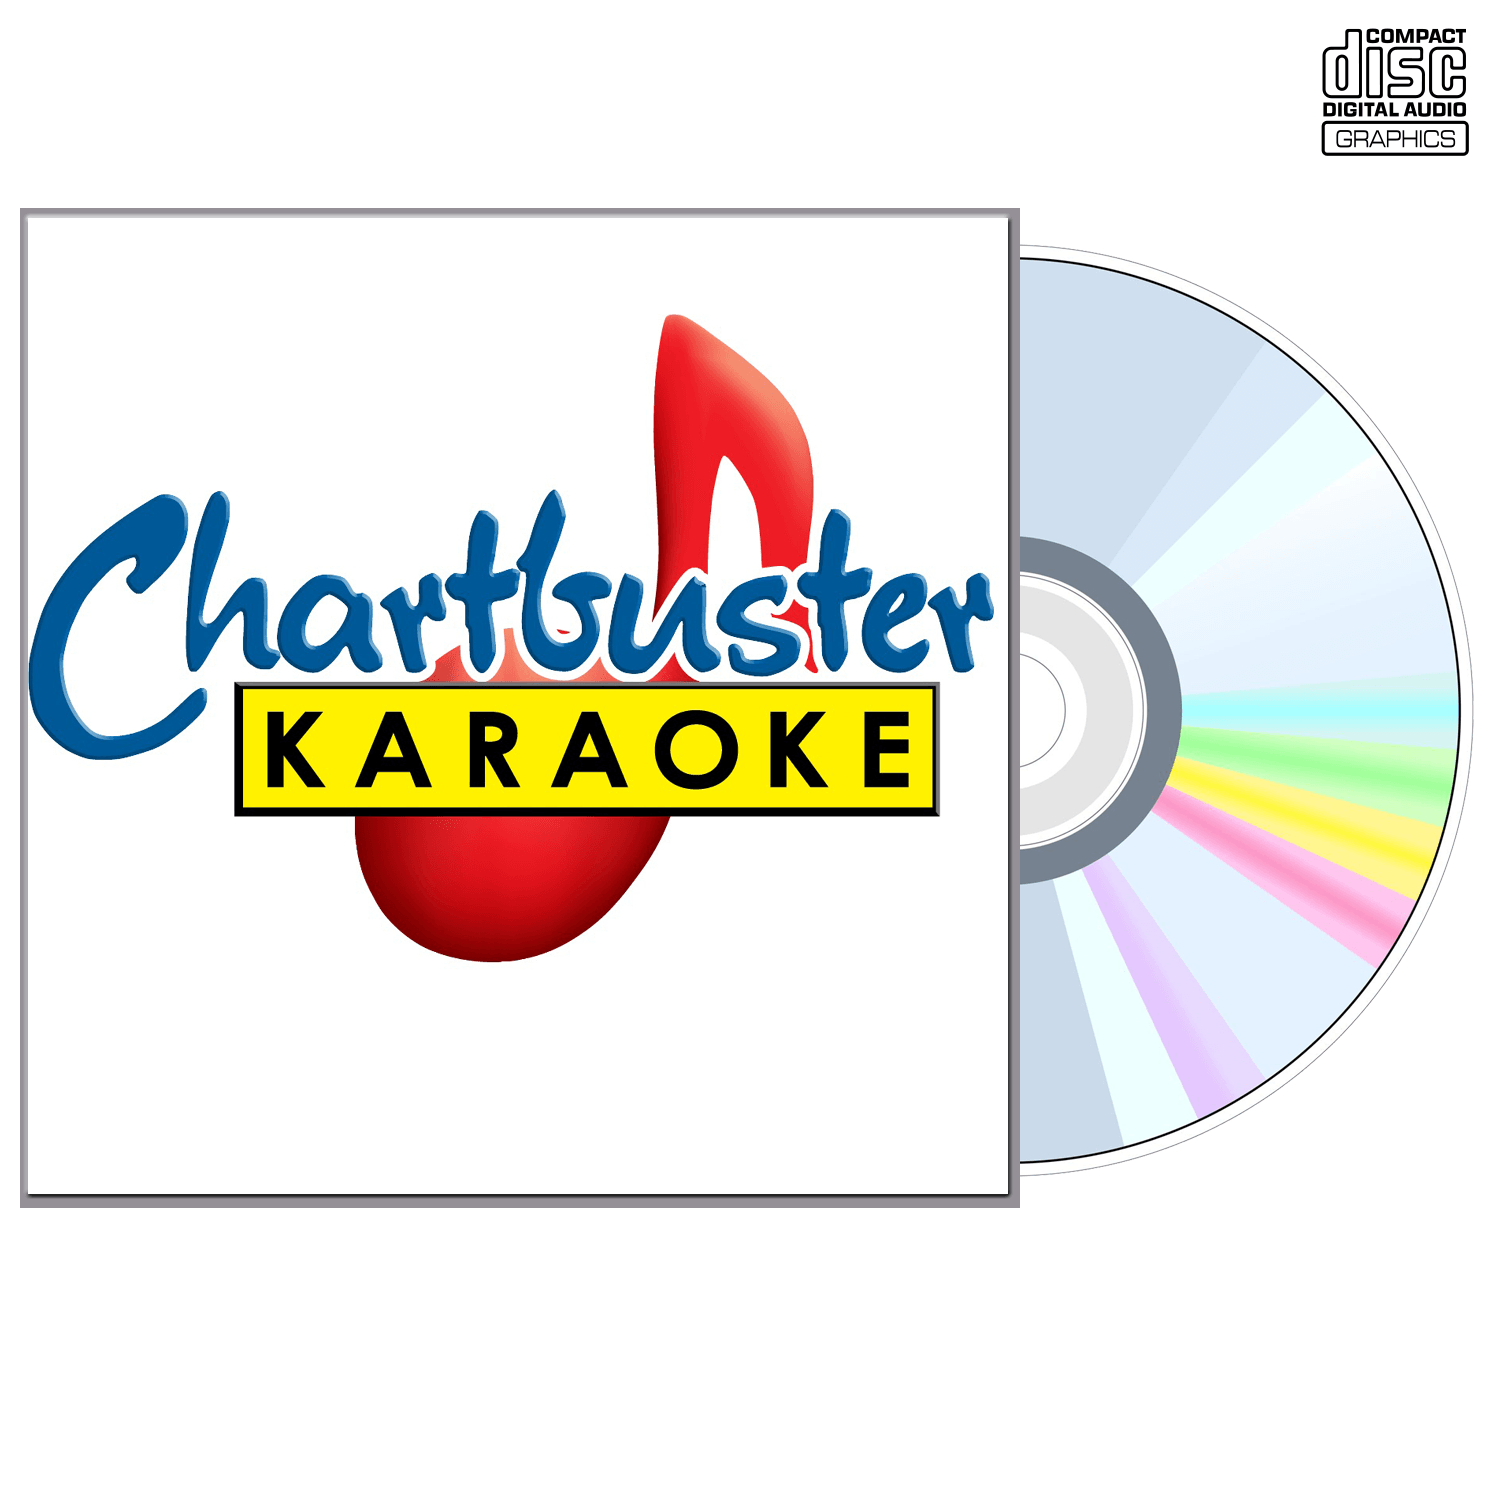 Steve Wariner Vol 1 - CD+G - Chartbuster Karaoke - Karaoke Home Entertainment